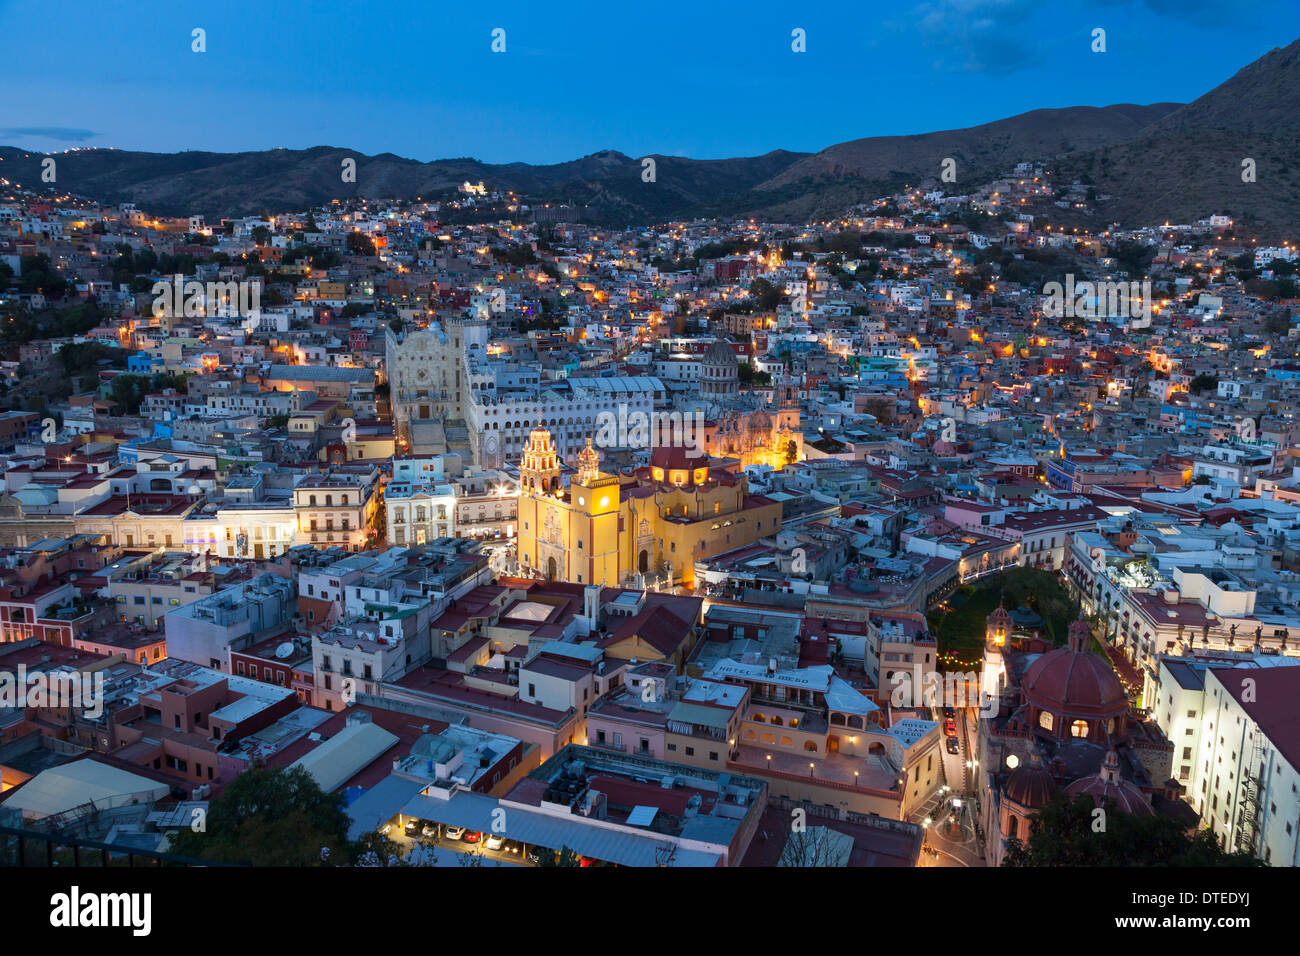 Overview of the city of Guanajuato, early evening - Guanajuato, Guanajuato, Mexico Stock Photo